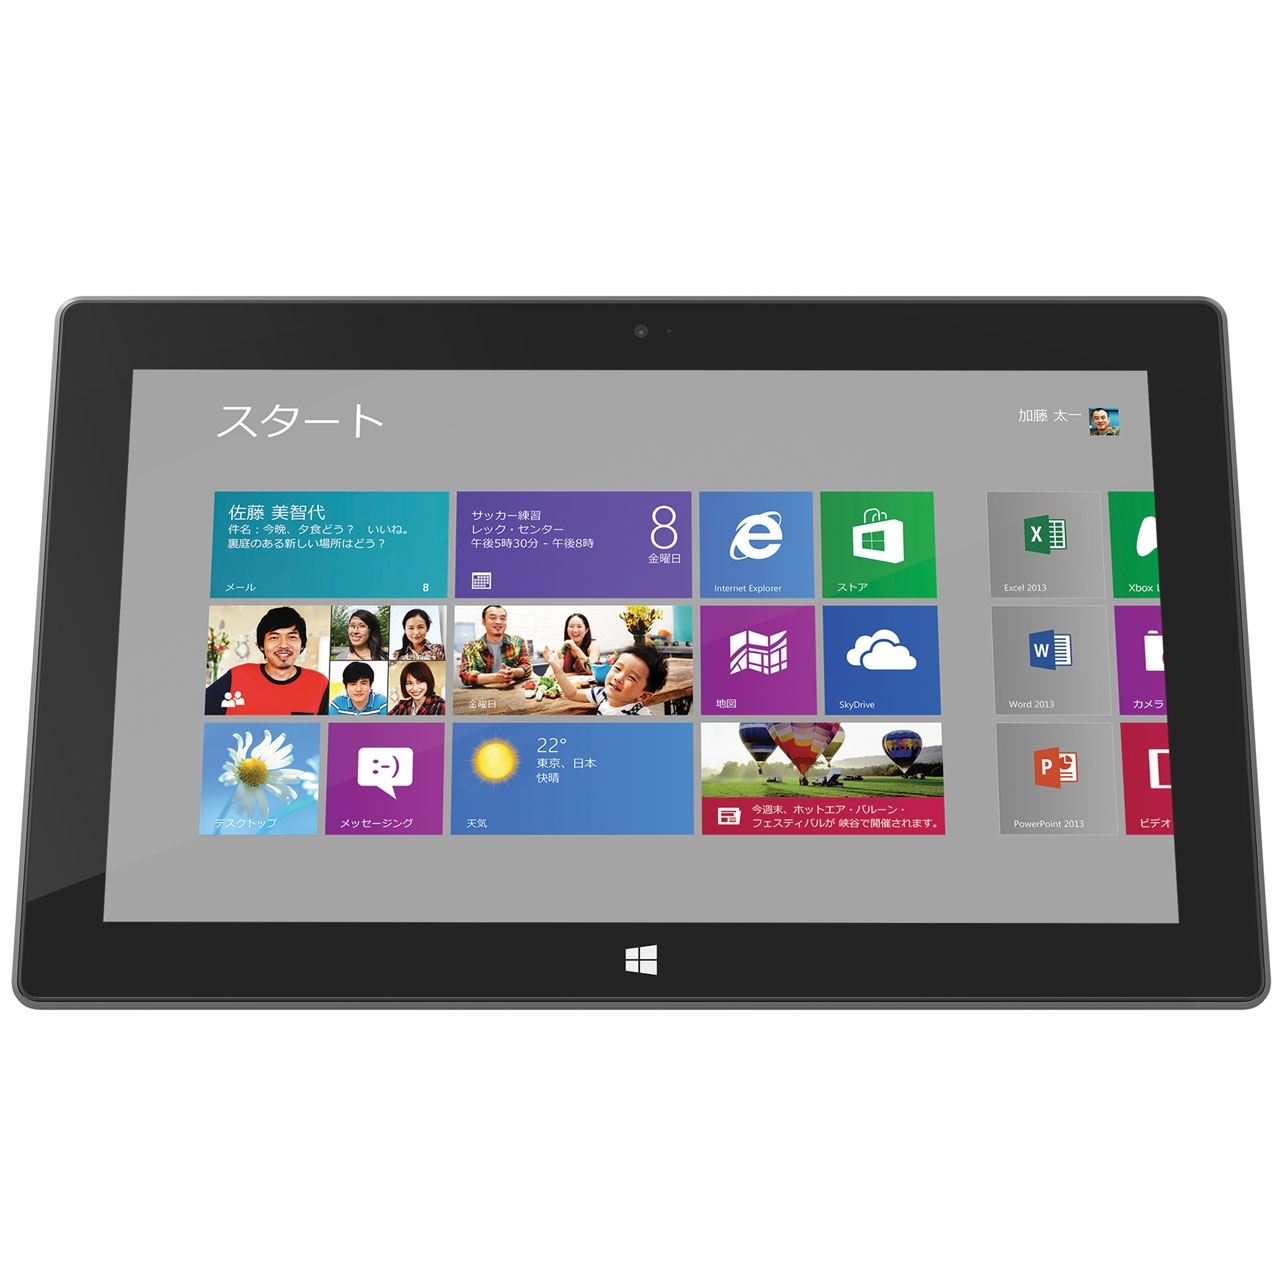 Microsoft Microsoft Surface RT 7ZR 00001 Tablet 64GB WiFi (Dark